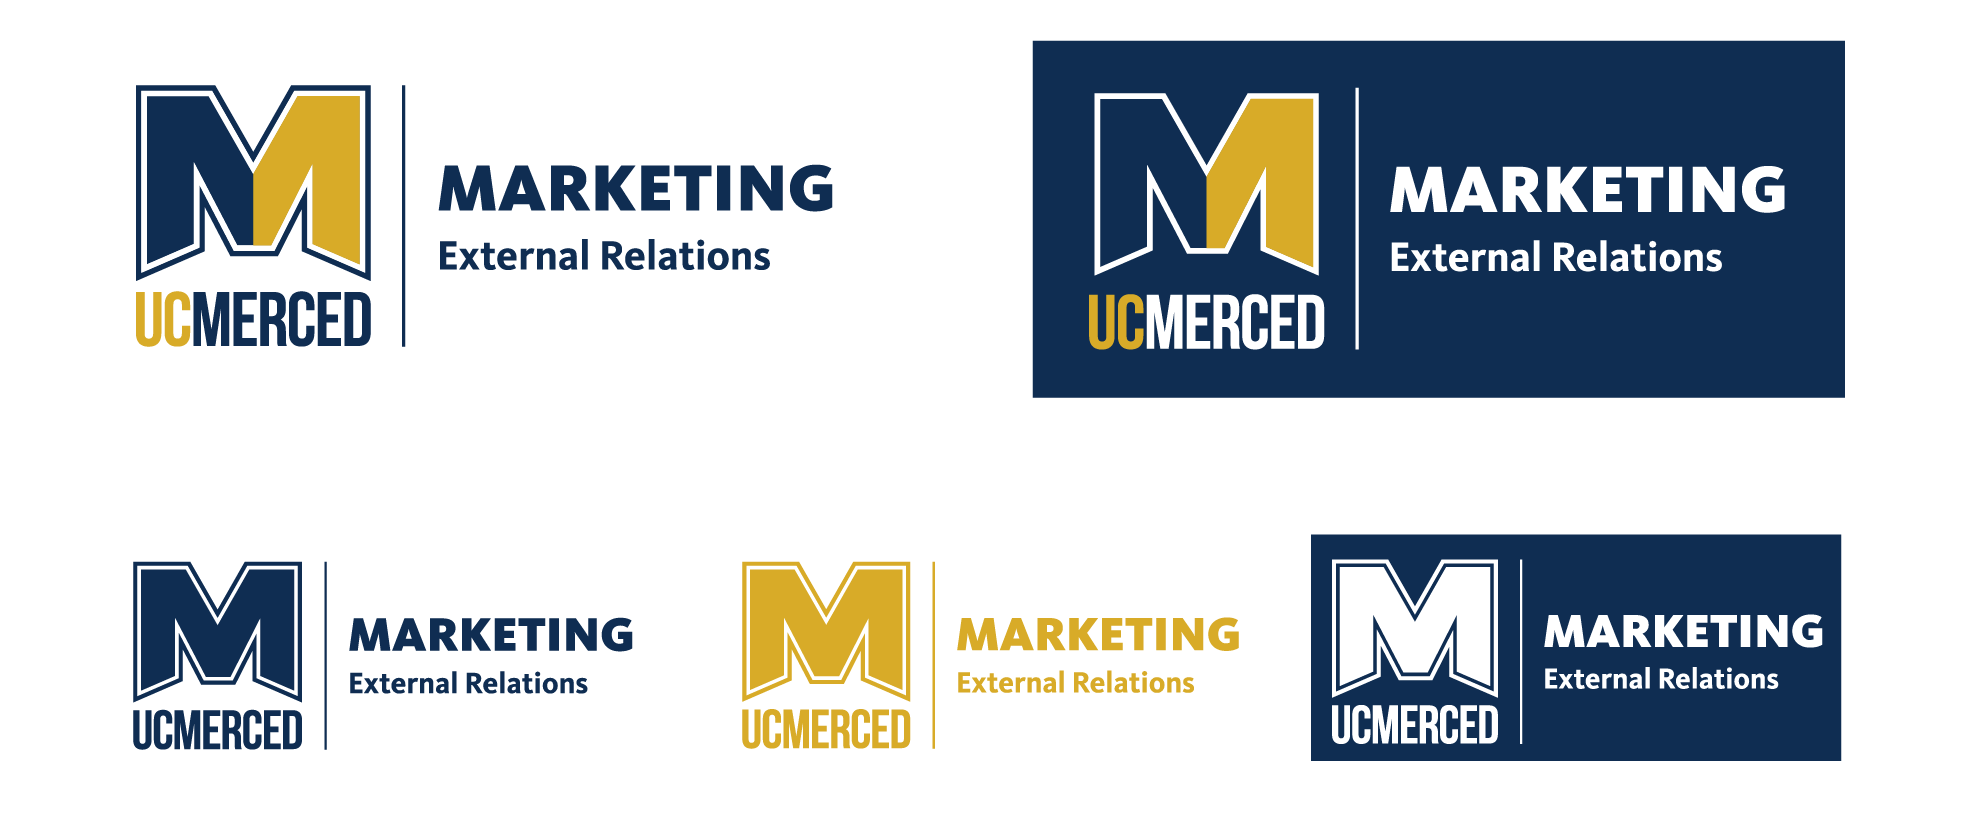 UC Merced co-marketing graphic